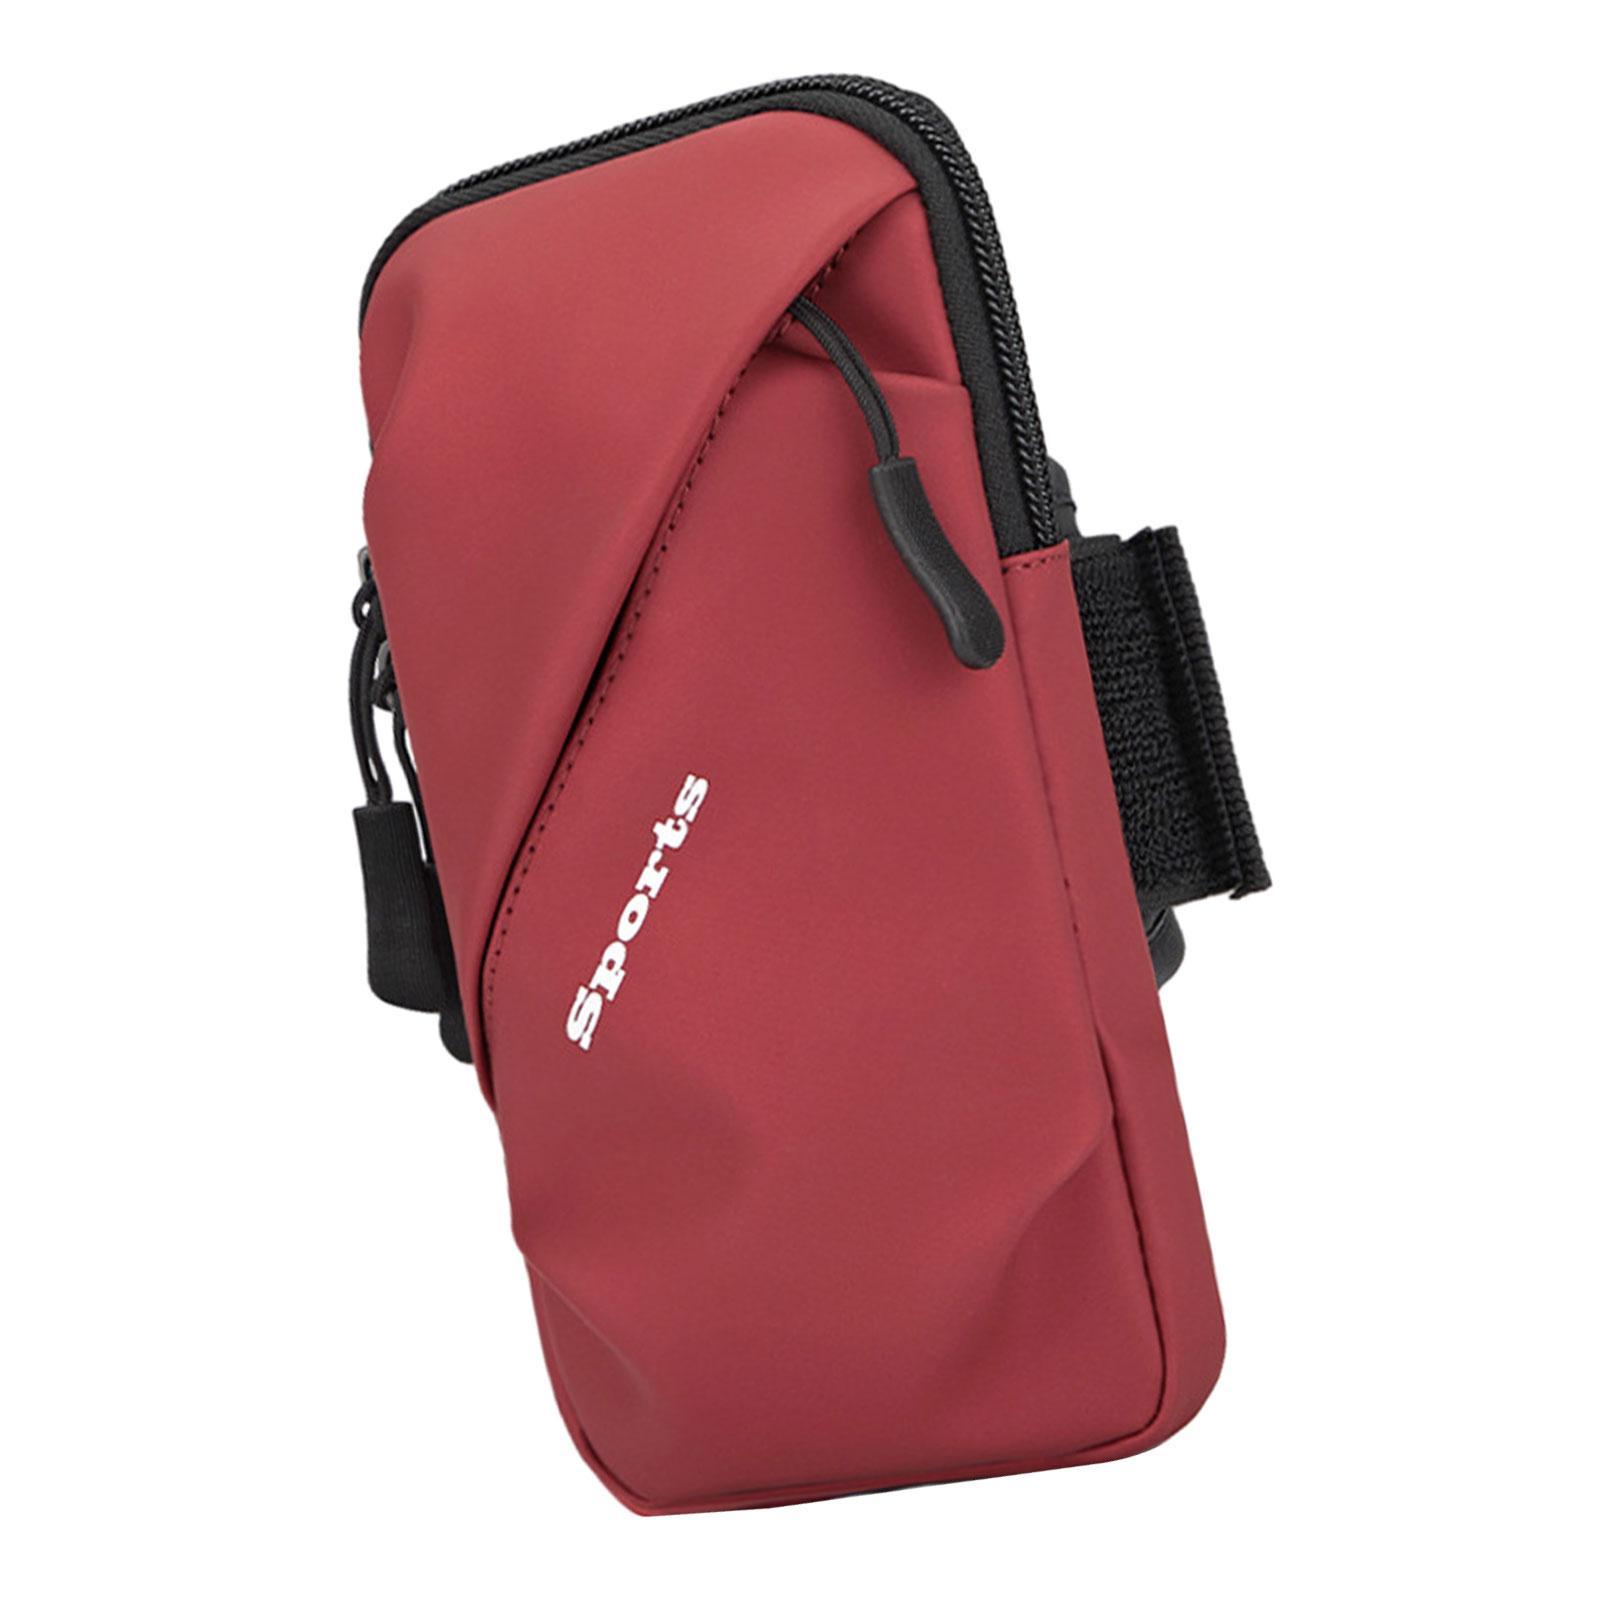 Phone Armband Bag Sports Arm Bag Cellphone Holder Gym Armbands Bag Phone Wristband for Running Jogging Workout Walking